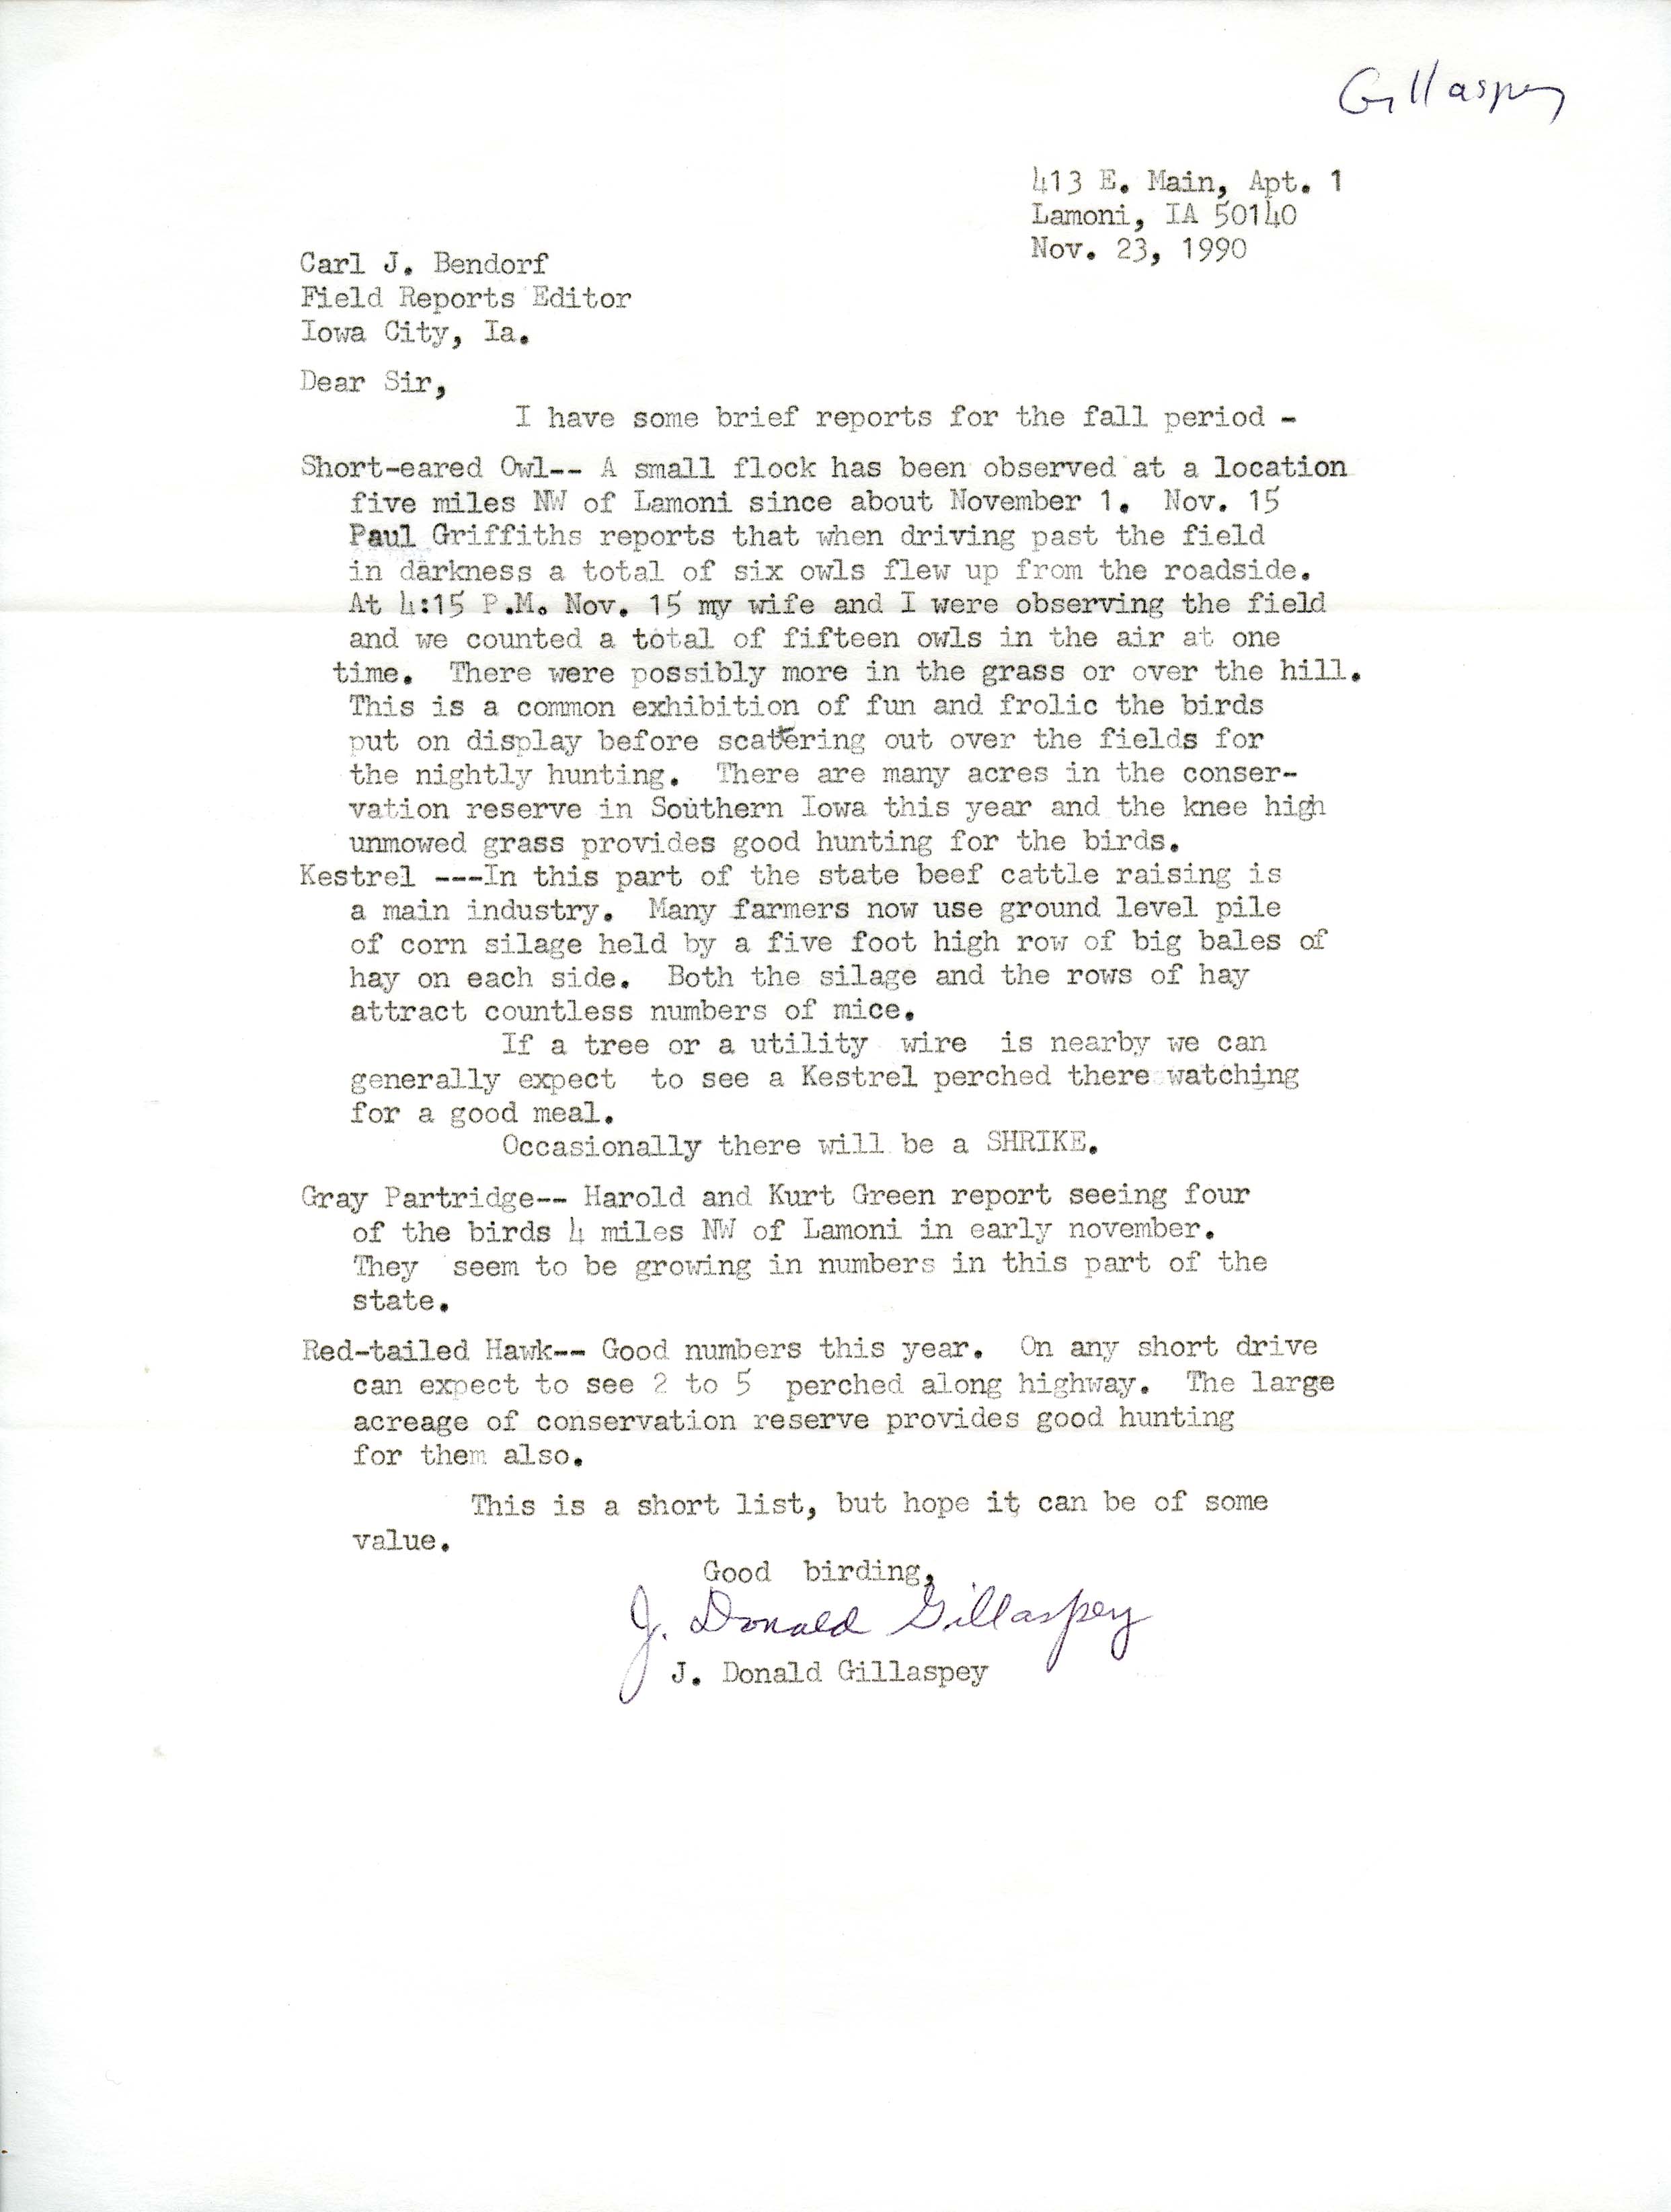 J. Donald Gillaspey letter to Carl J. Bendorf regarding bird sightings in Lamoni, IA, November 23, 1990